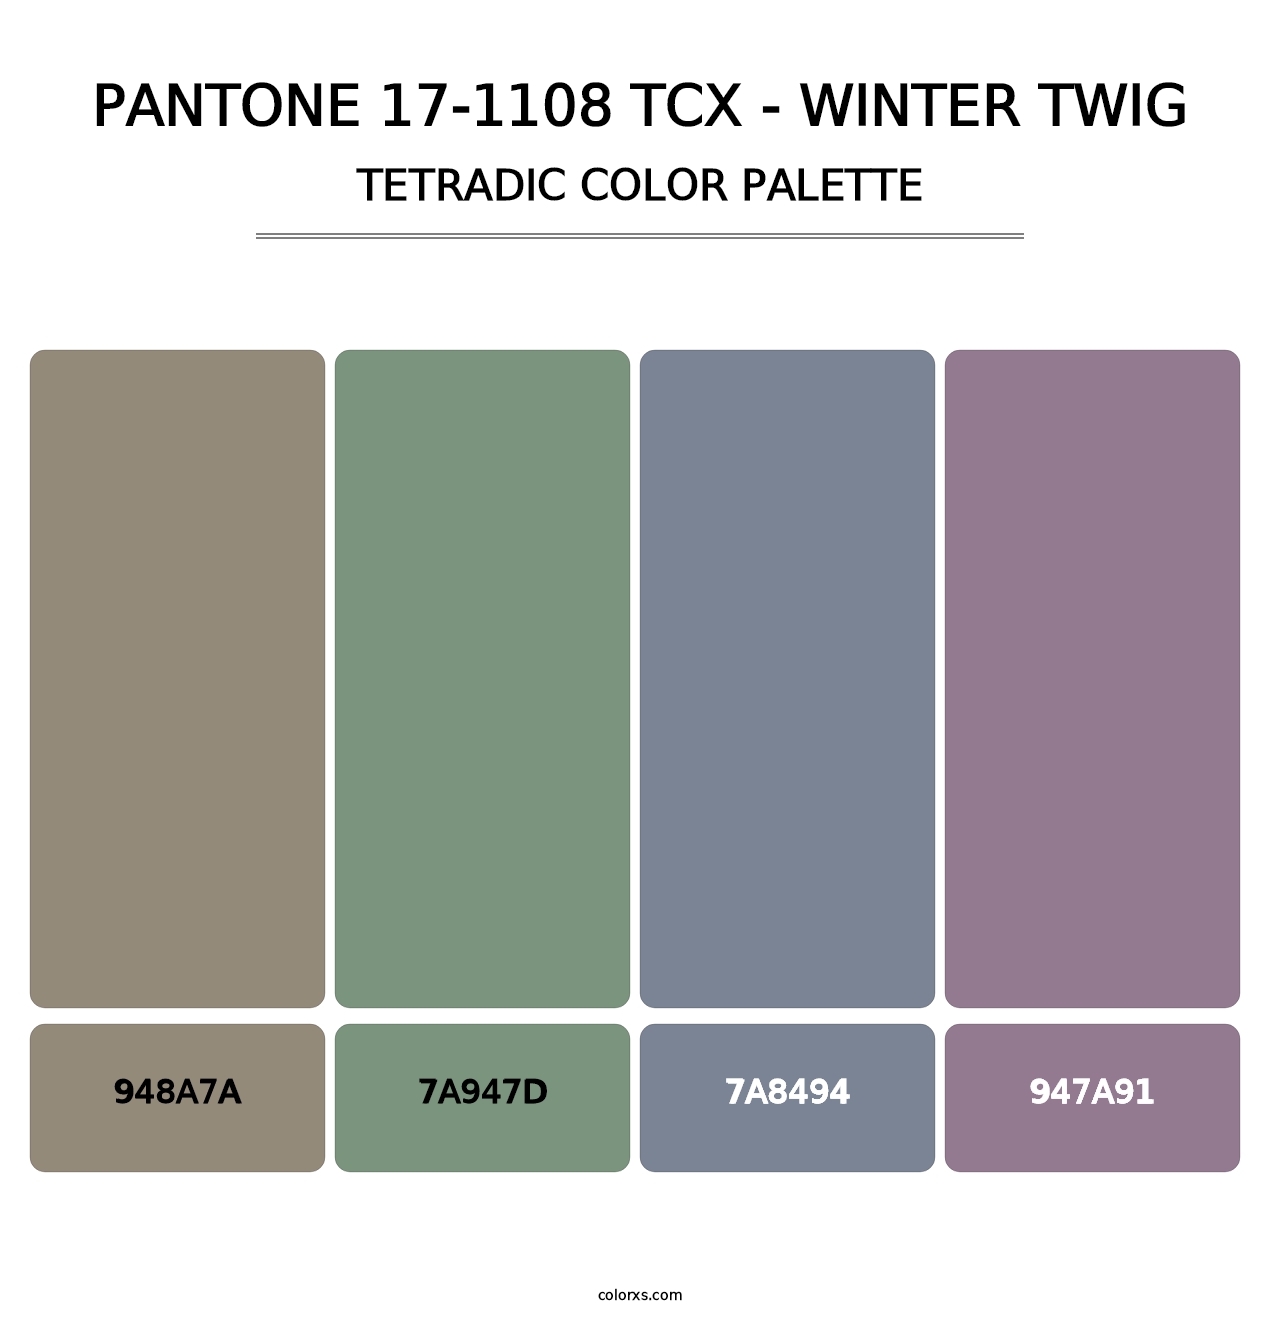 PANTONE 17-1108 TCX - Winter Twig - Tetradic Color Palette